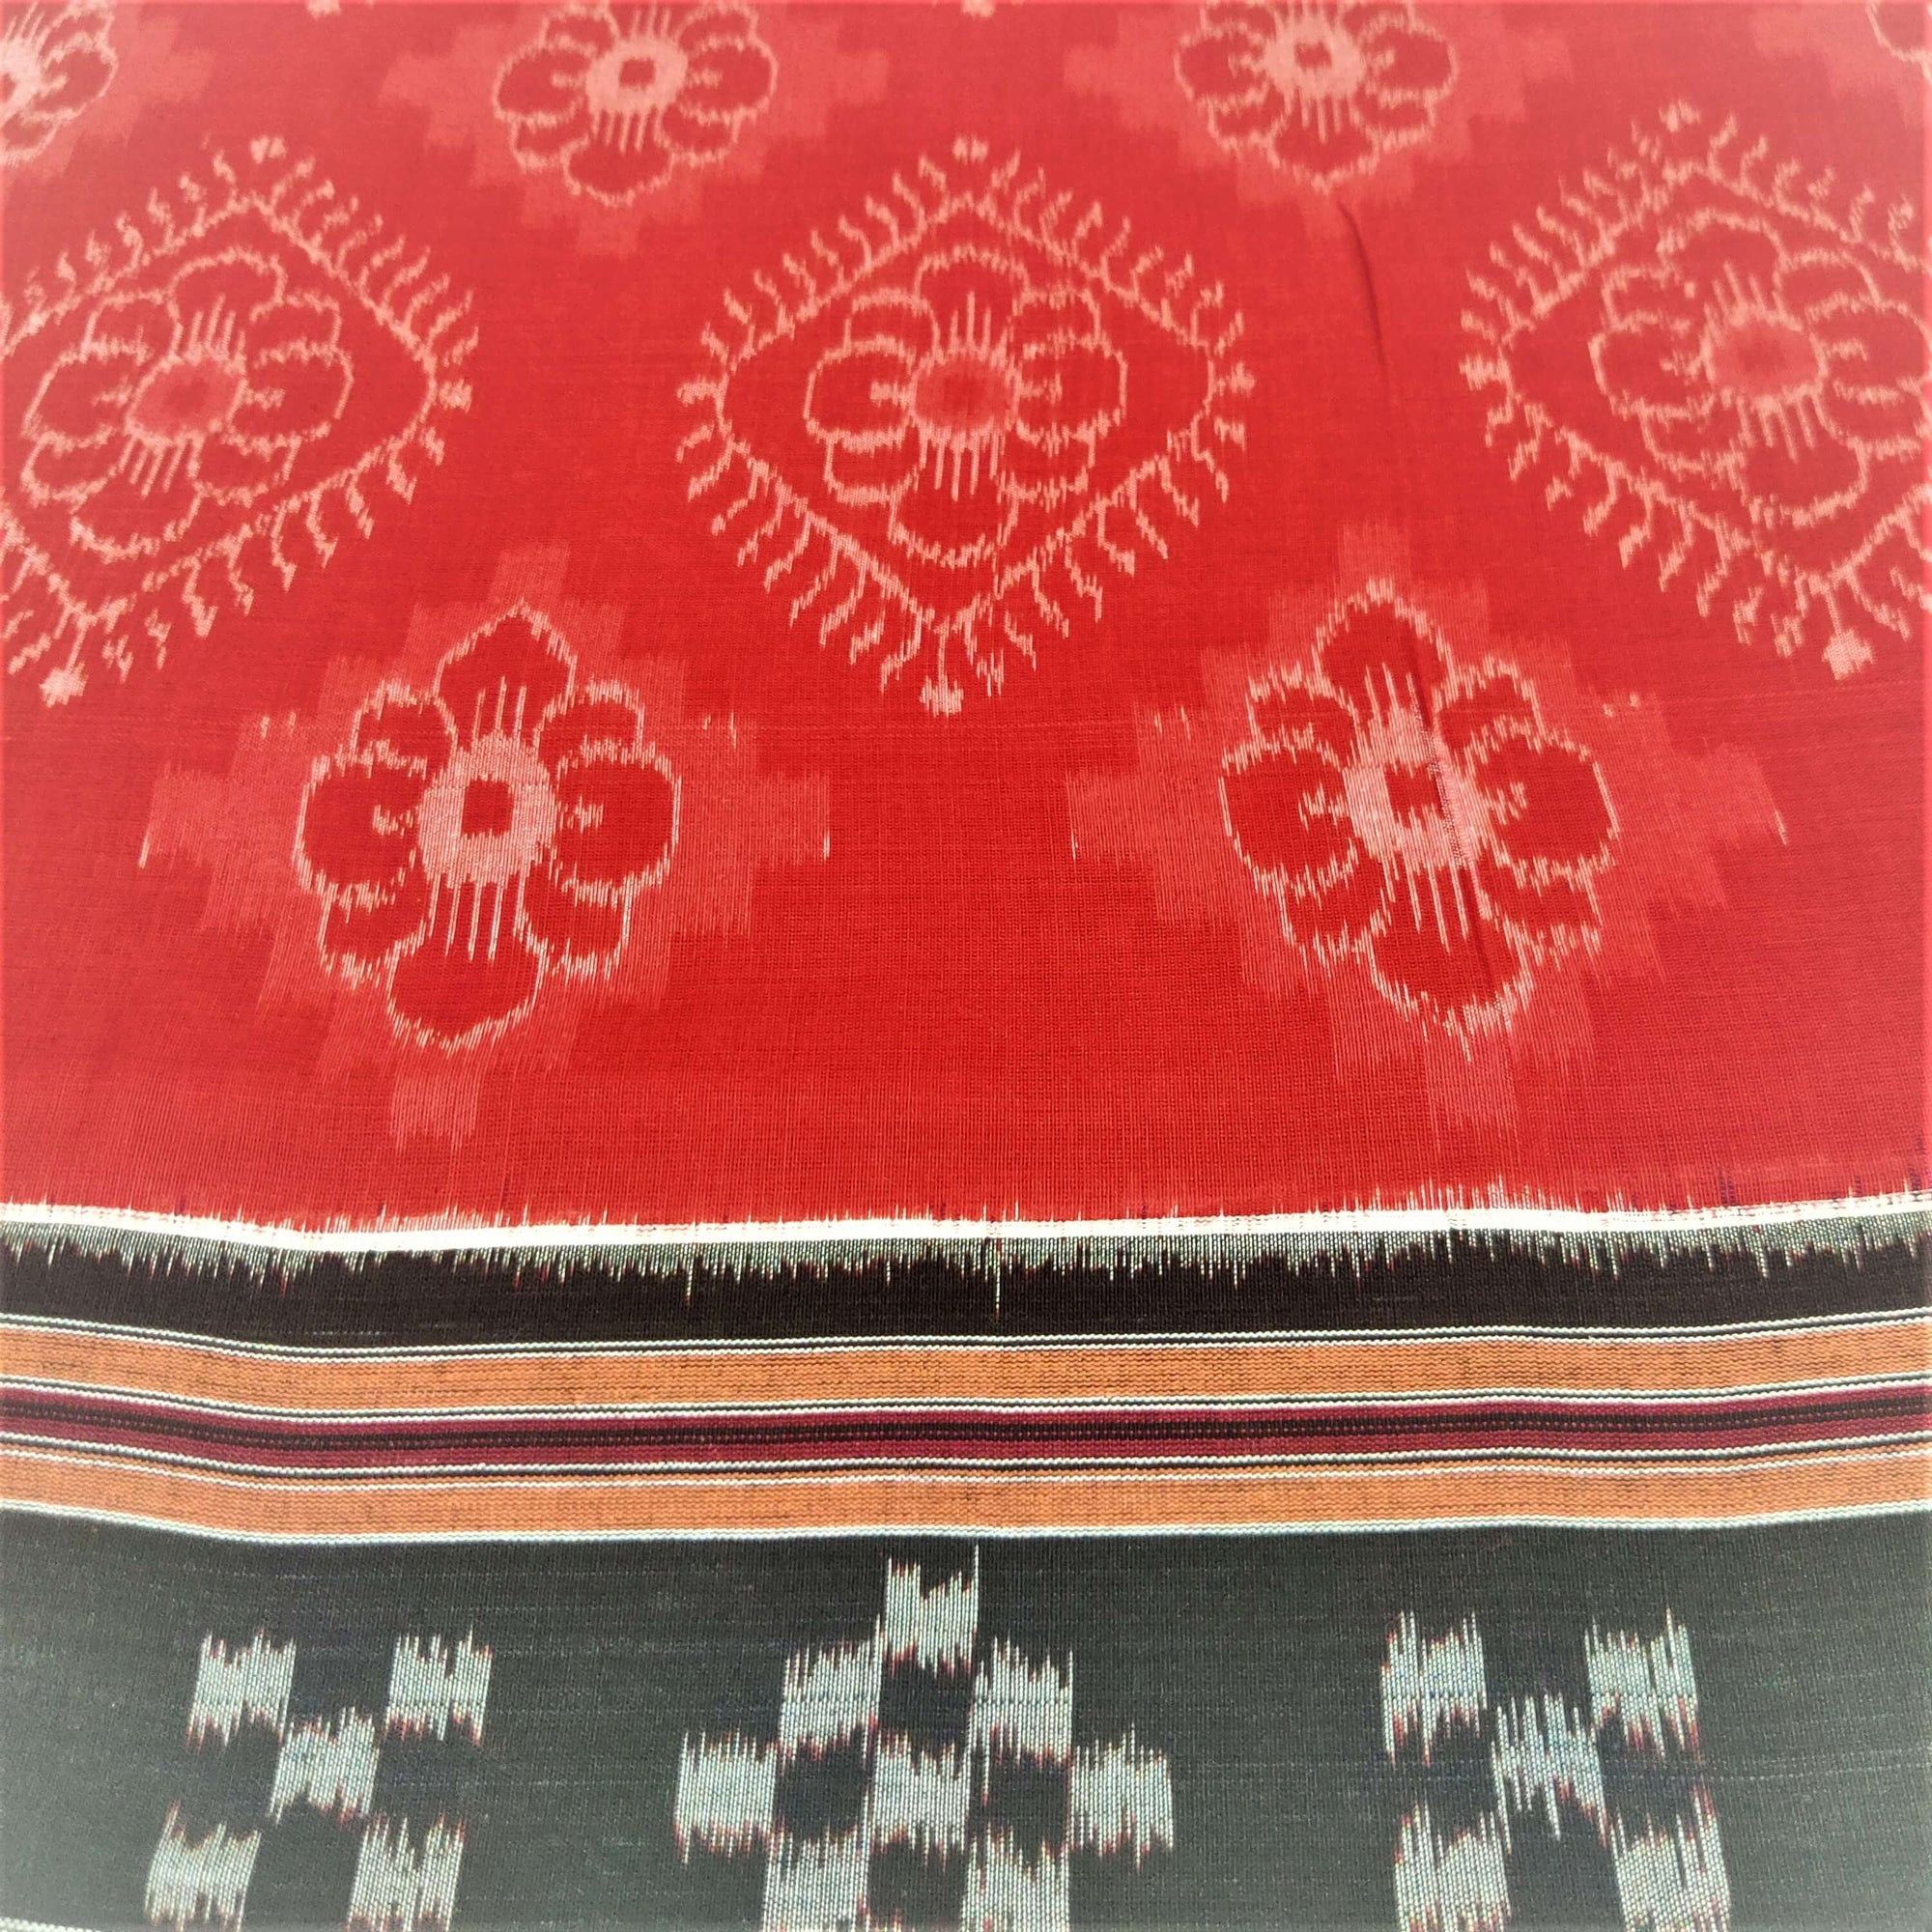 Red and Black Sambalpuri Cotton Saree